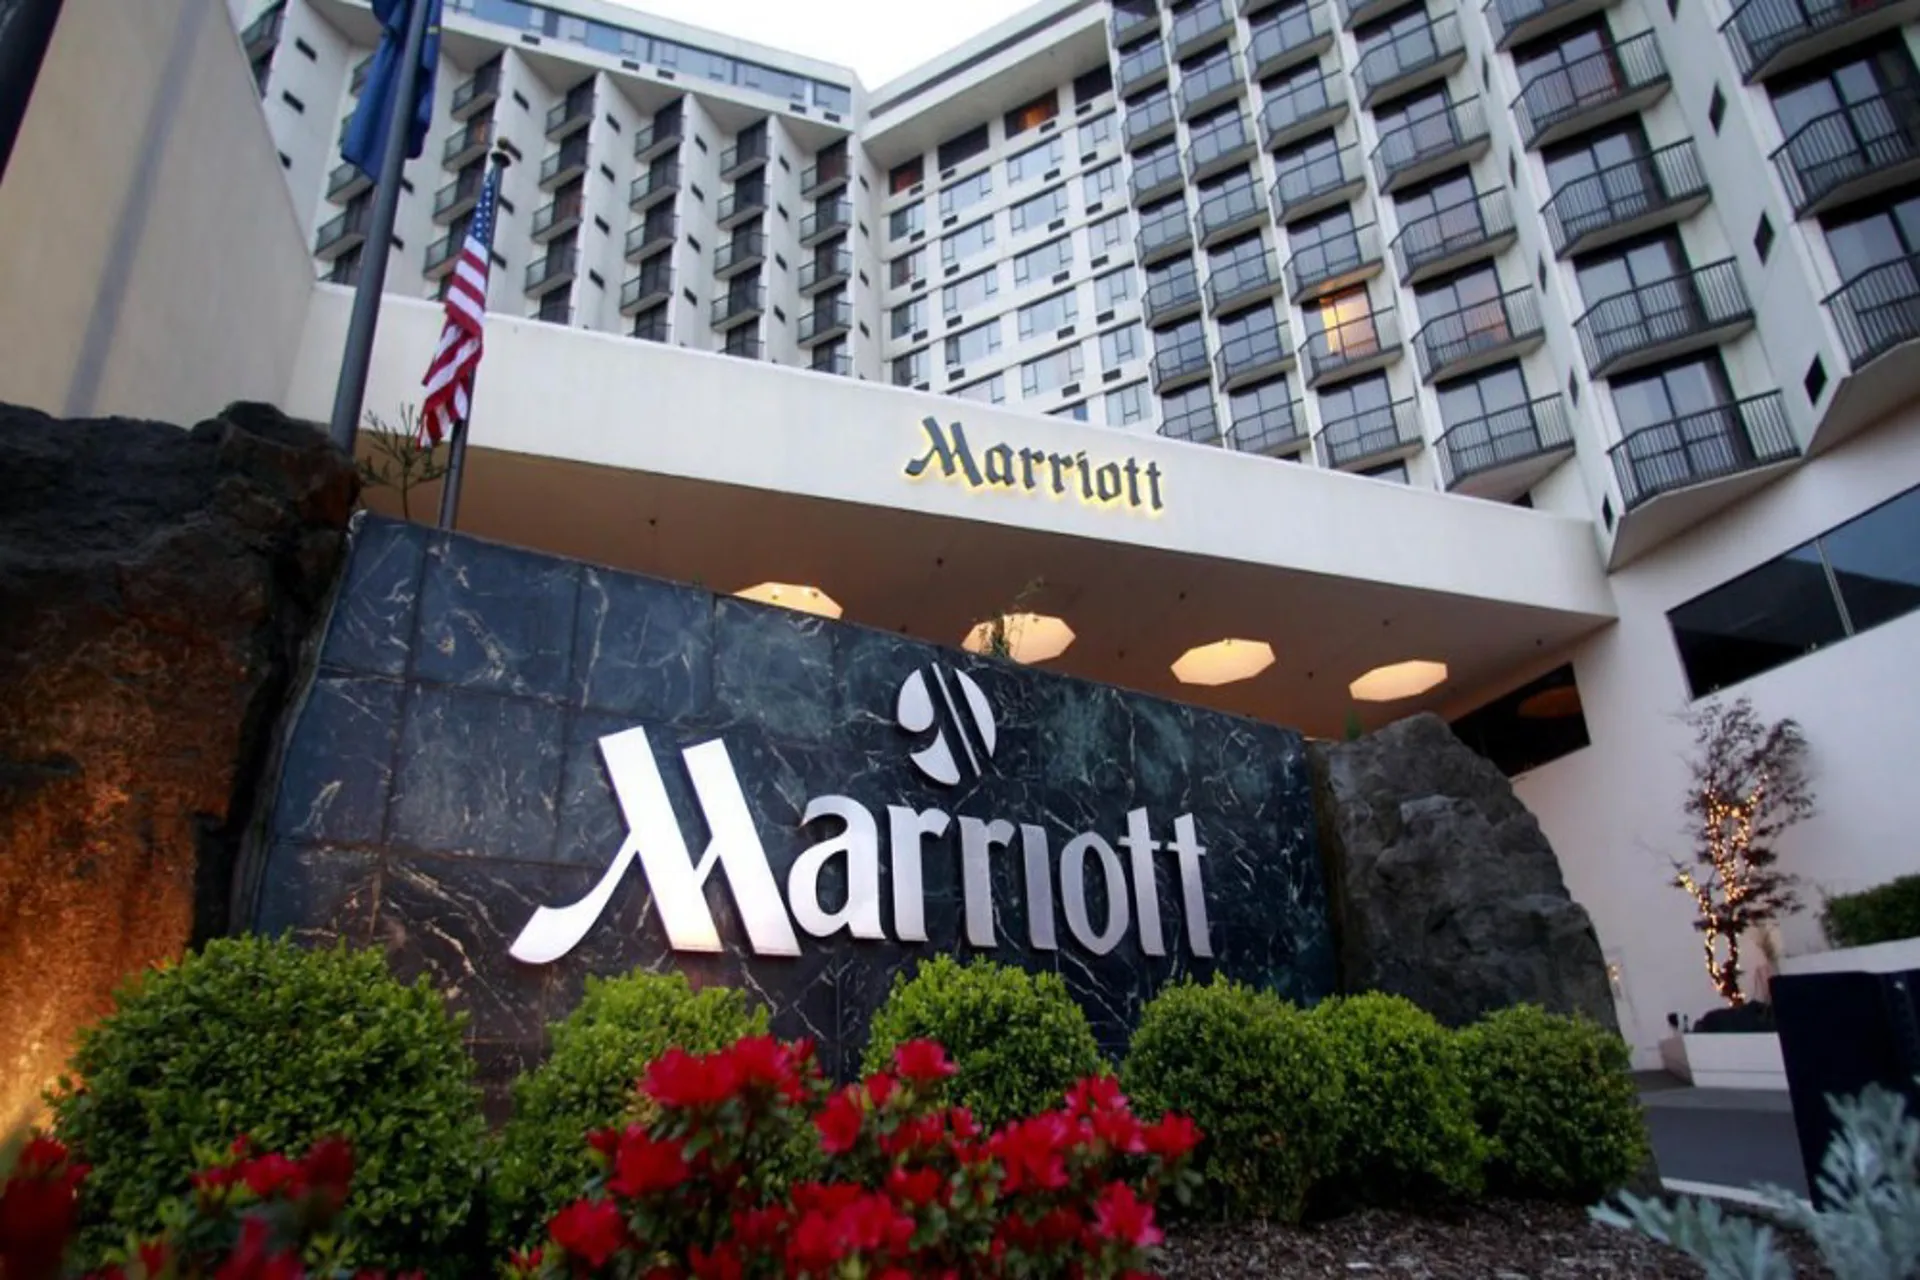 Marriott registra un récord de reservas directas en sus hoteles